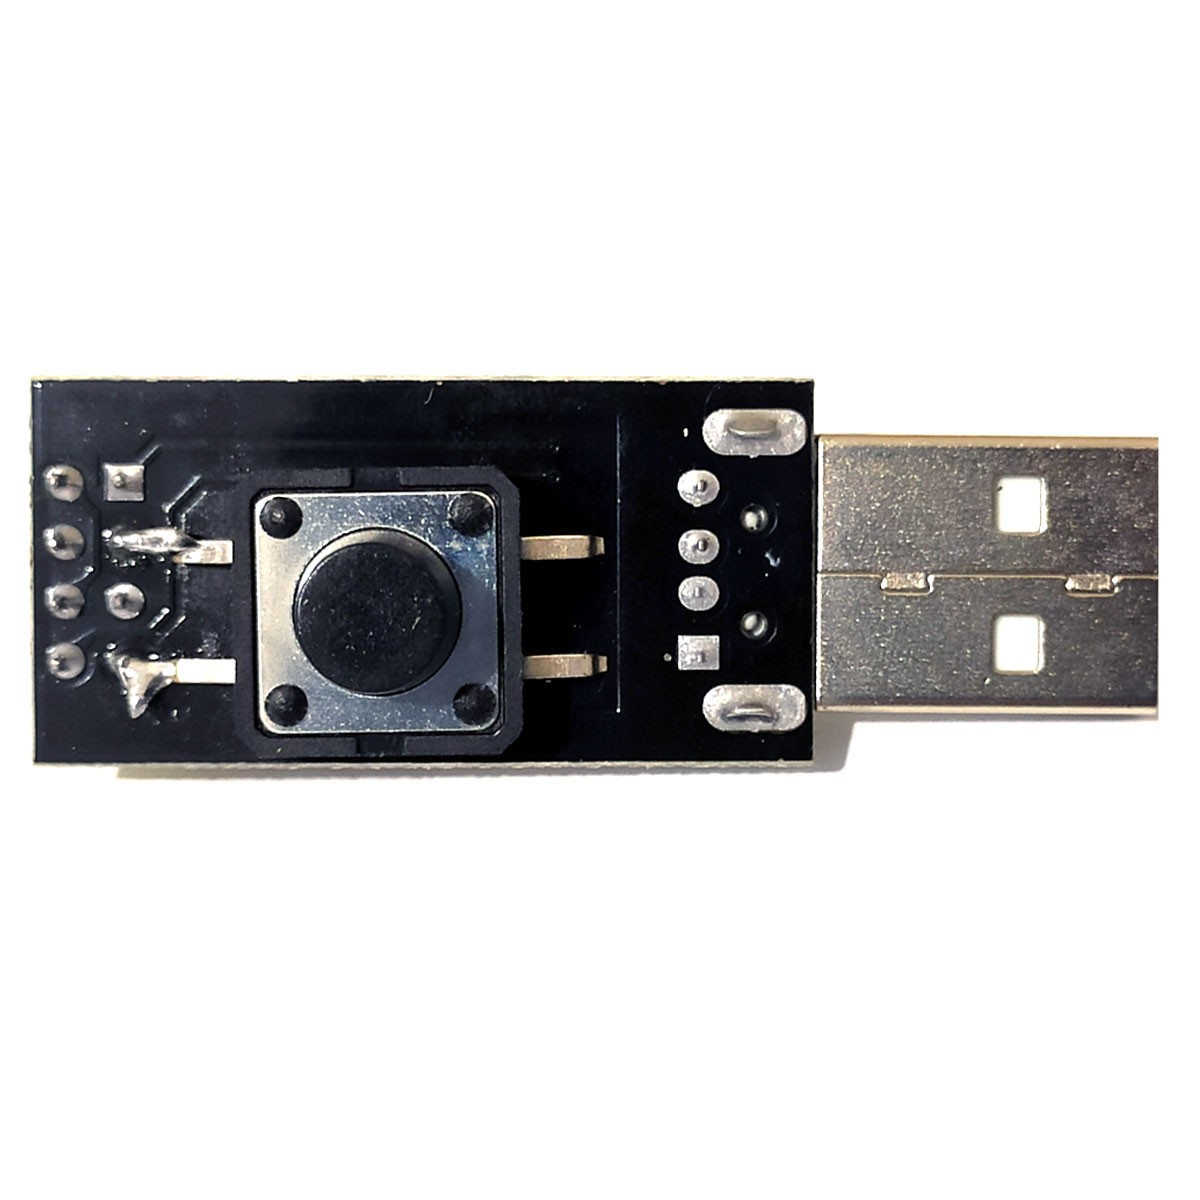 Placa Esp8266 Esp-01 +Adaptador USB Serial + Adaptador para Protoboard